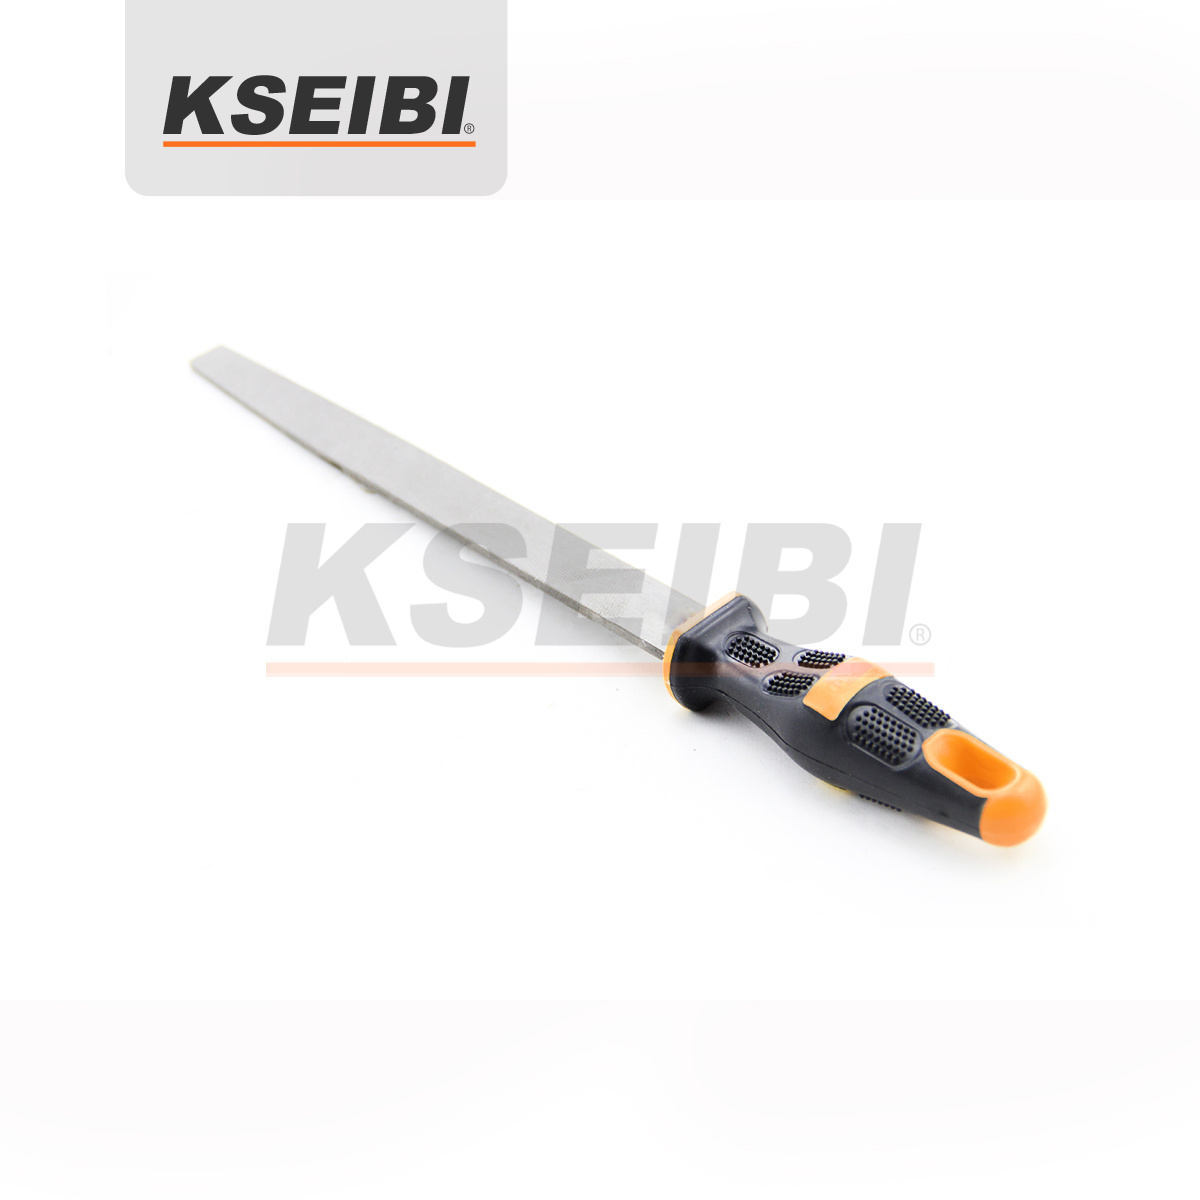 Abrasive Hand Tool Kseibi Steel Half Round Files with Handle